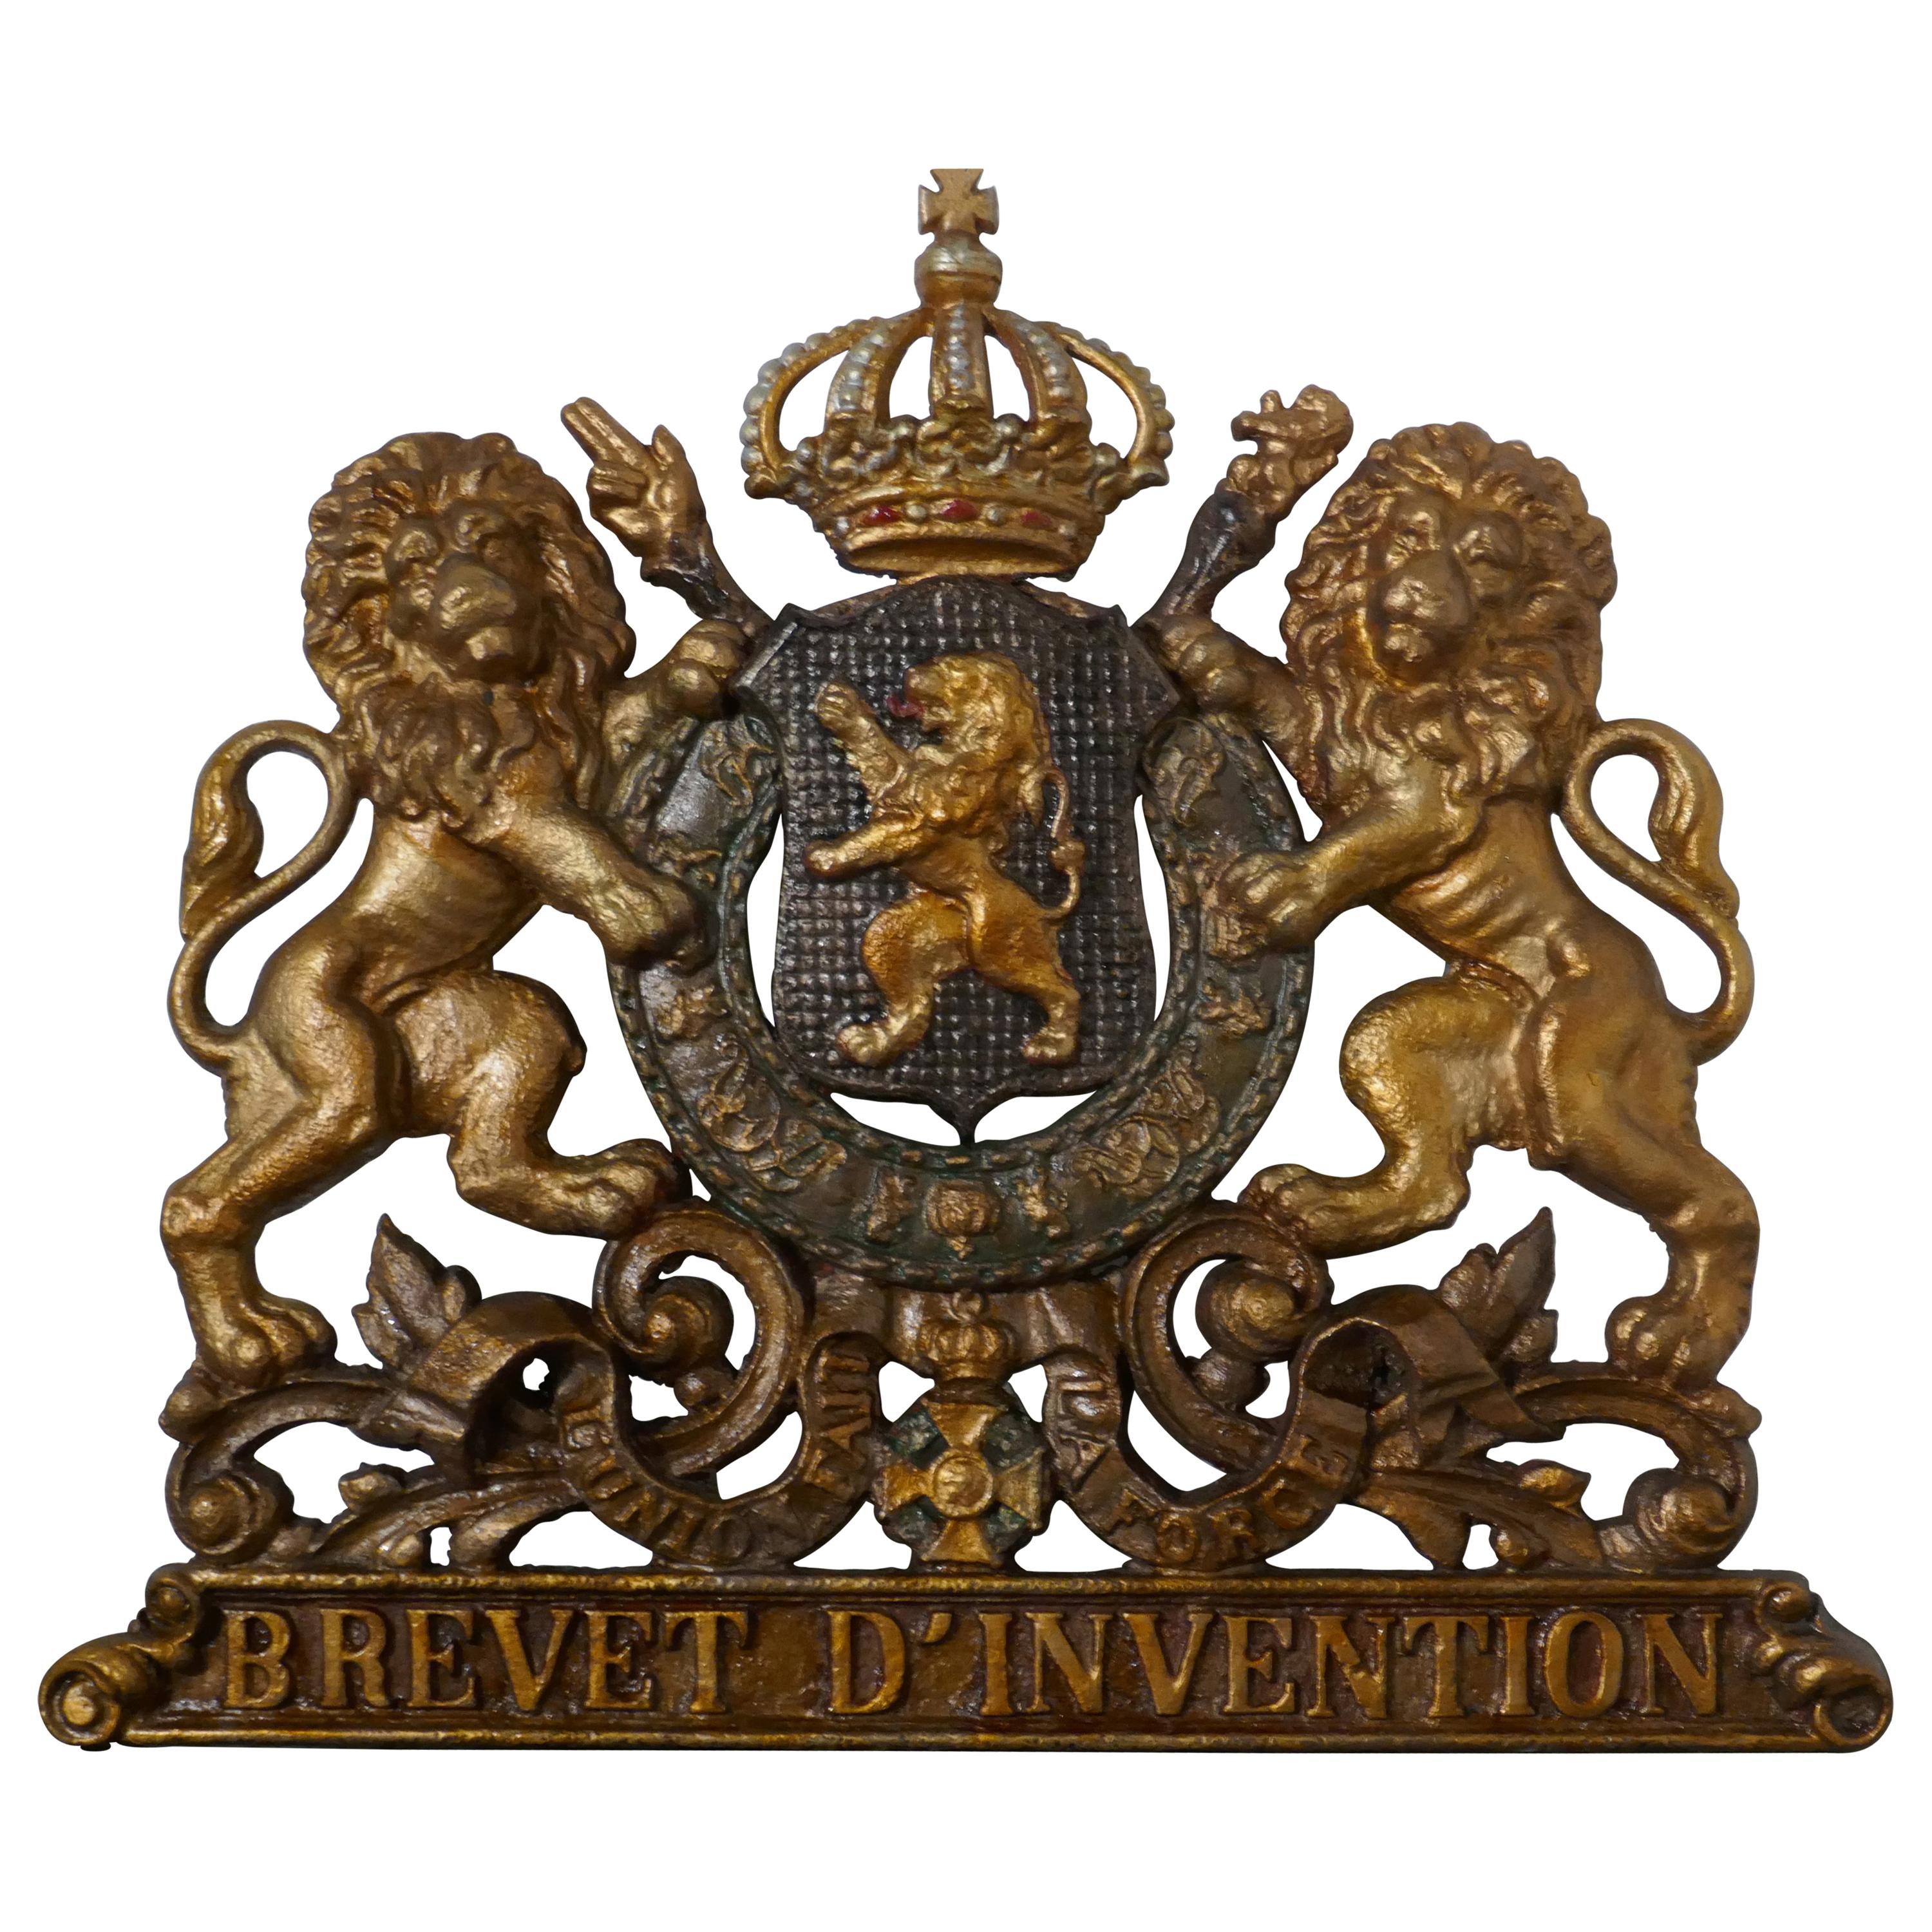 Belgian Cast Iron Heraldic Coat of Arms Shield